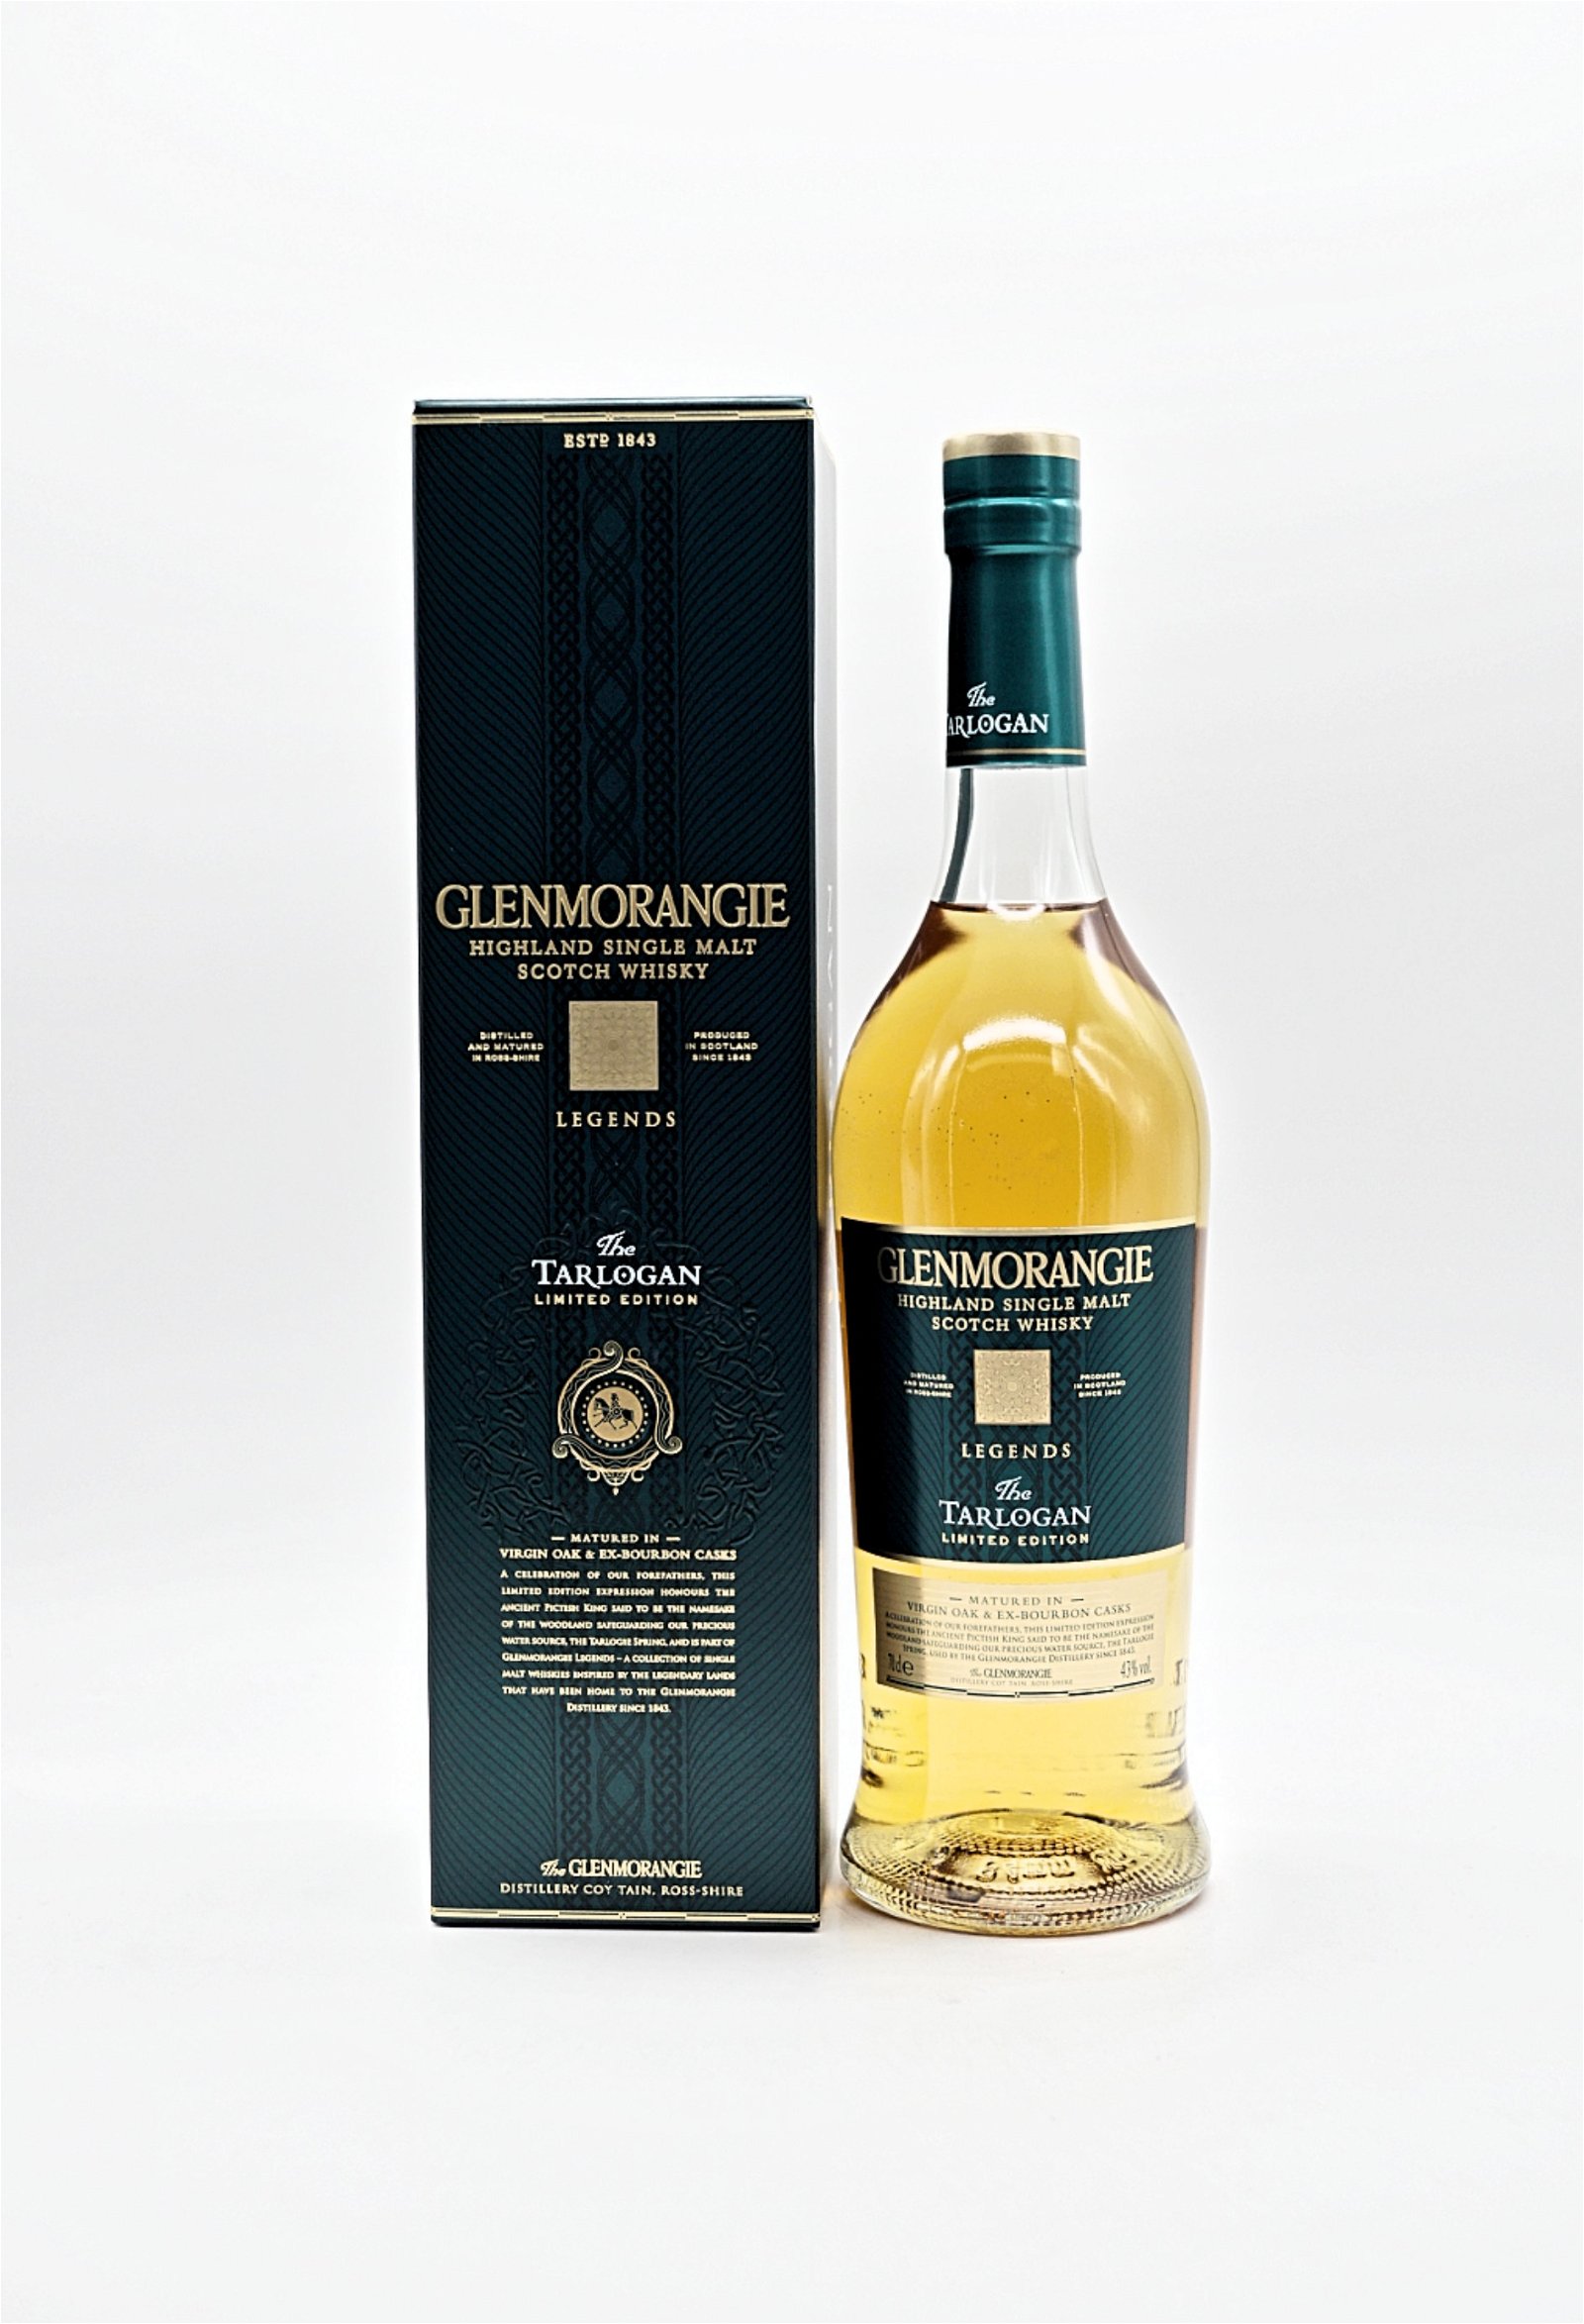 Glenmorangie The Tarlogan Limited Edition Highland Single Malt Scotch Whisky